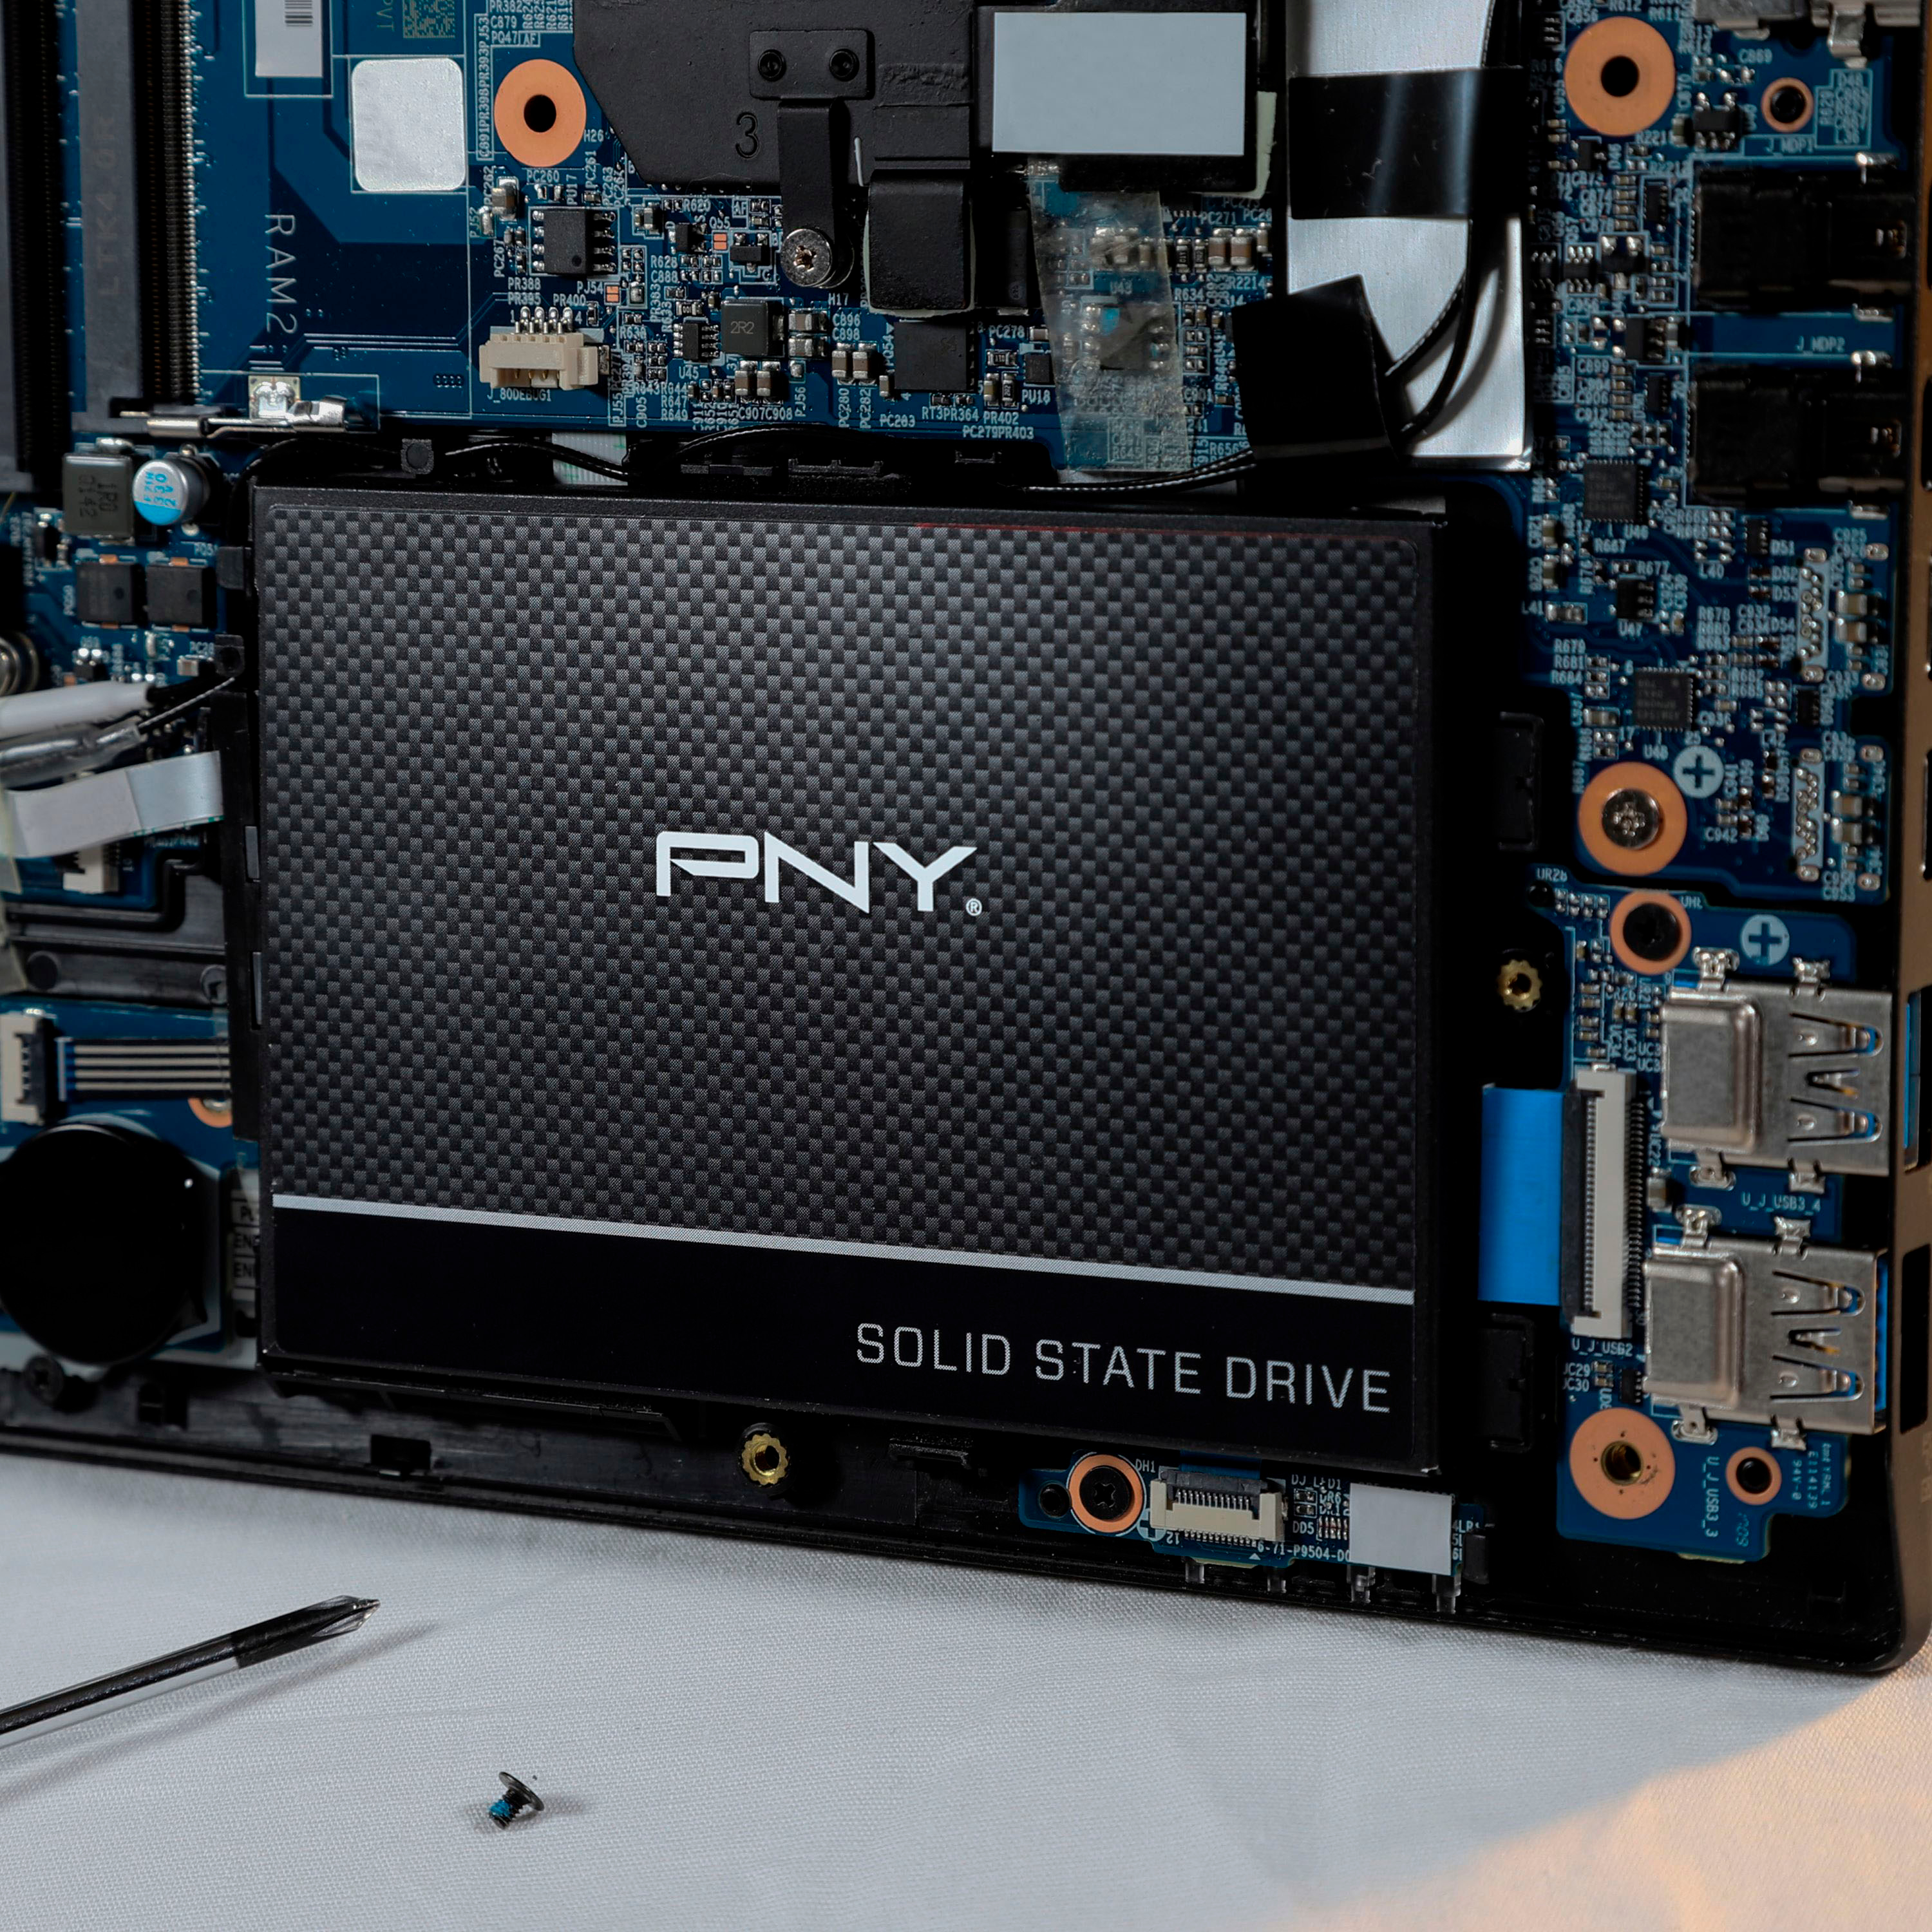 PNY SSD7CS900-480-RB 3D NAND 2.5 SATA III Internal Solid State Drive (SSD)